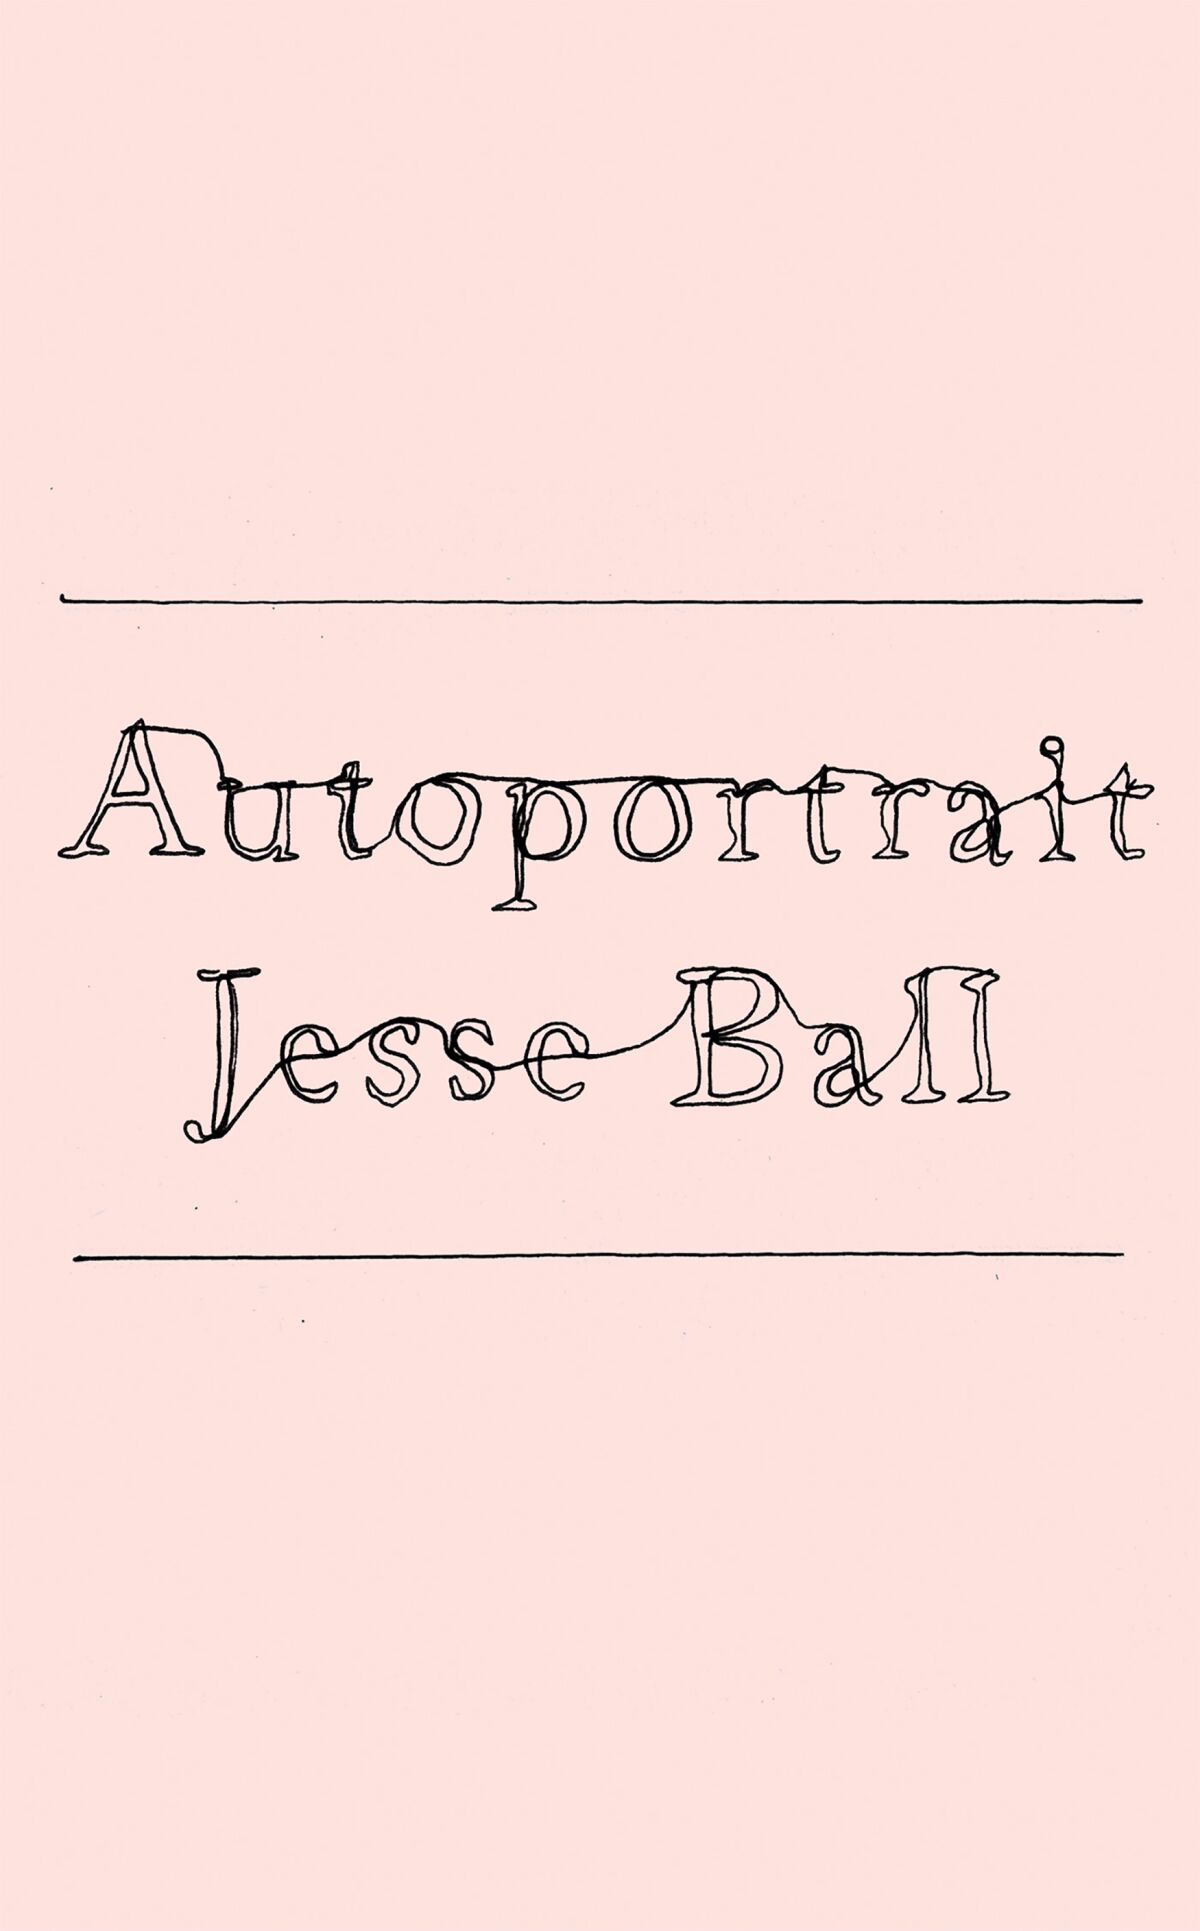 "Autoportrait" by Jesse Ball